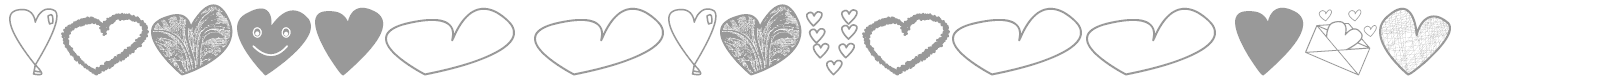 Font hearts shapess tfb